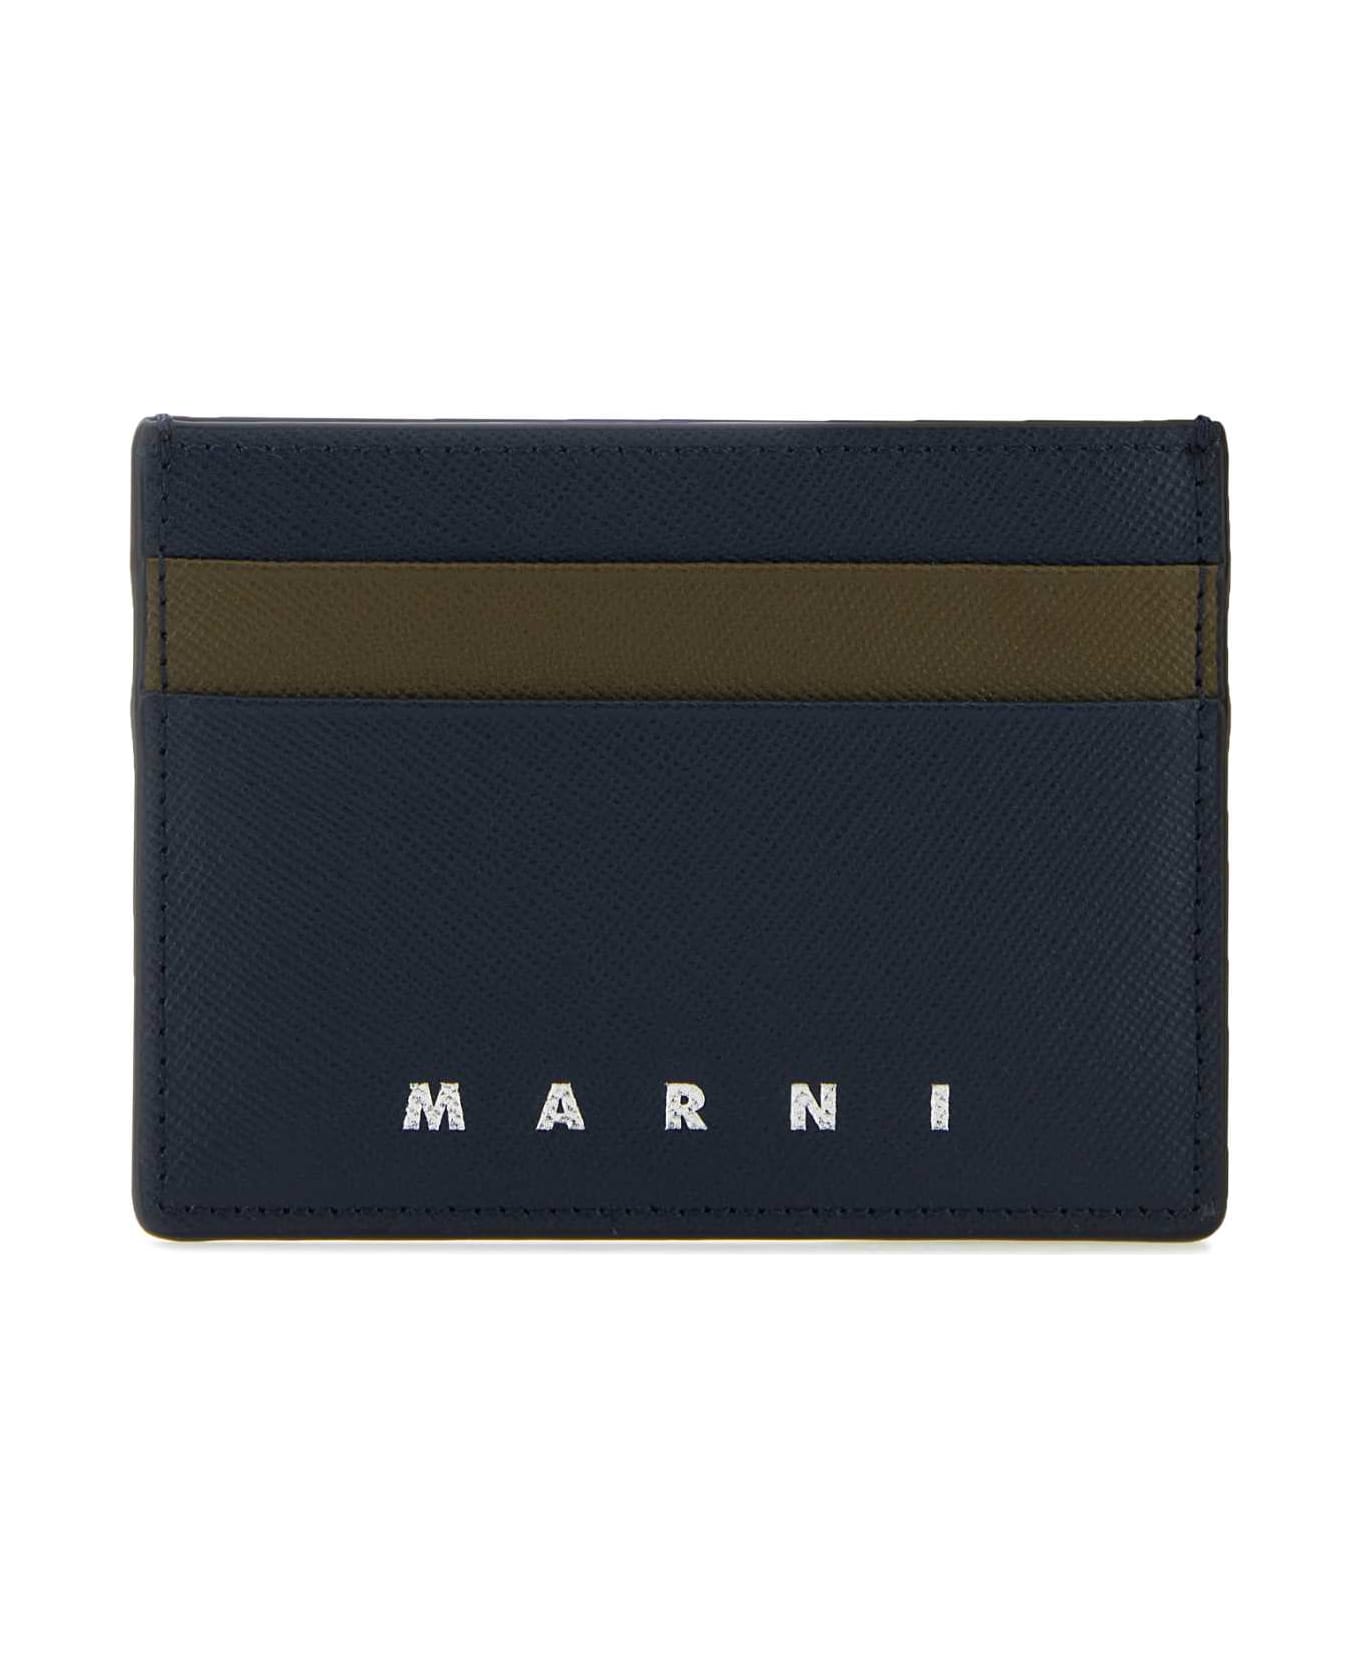 Marni Two-tone Leather Cardholder - NIGHTBLUEDUSTYOLIVE 財布